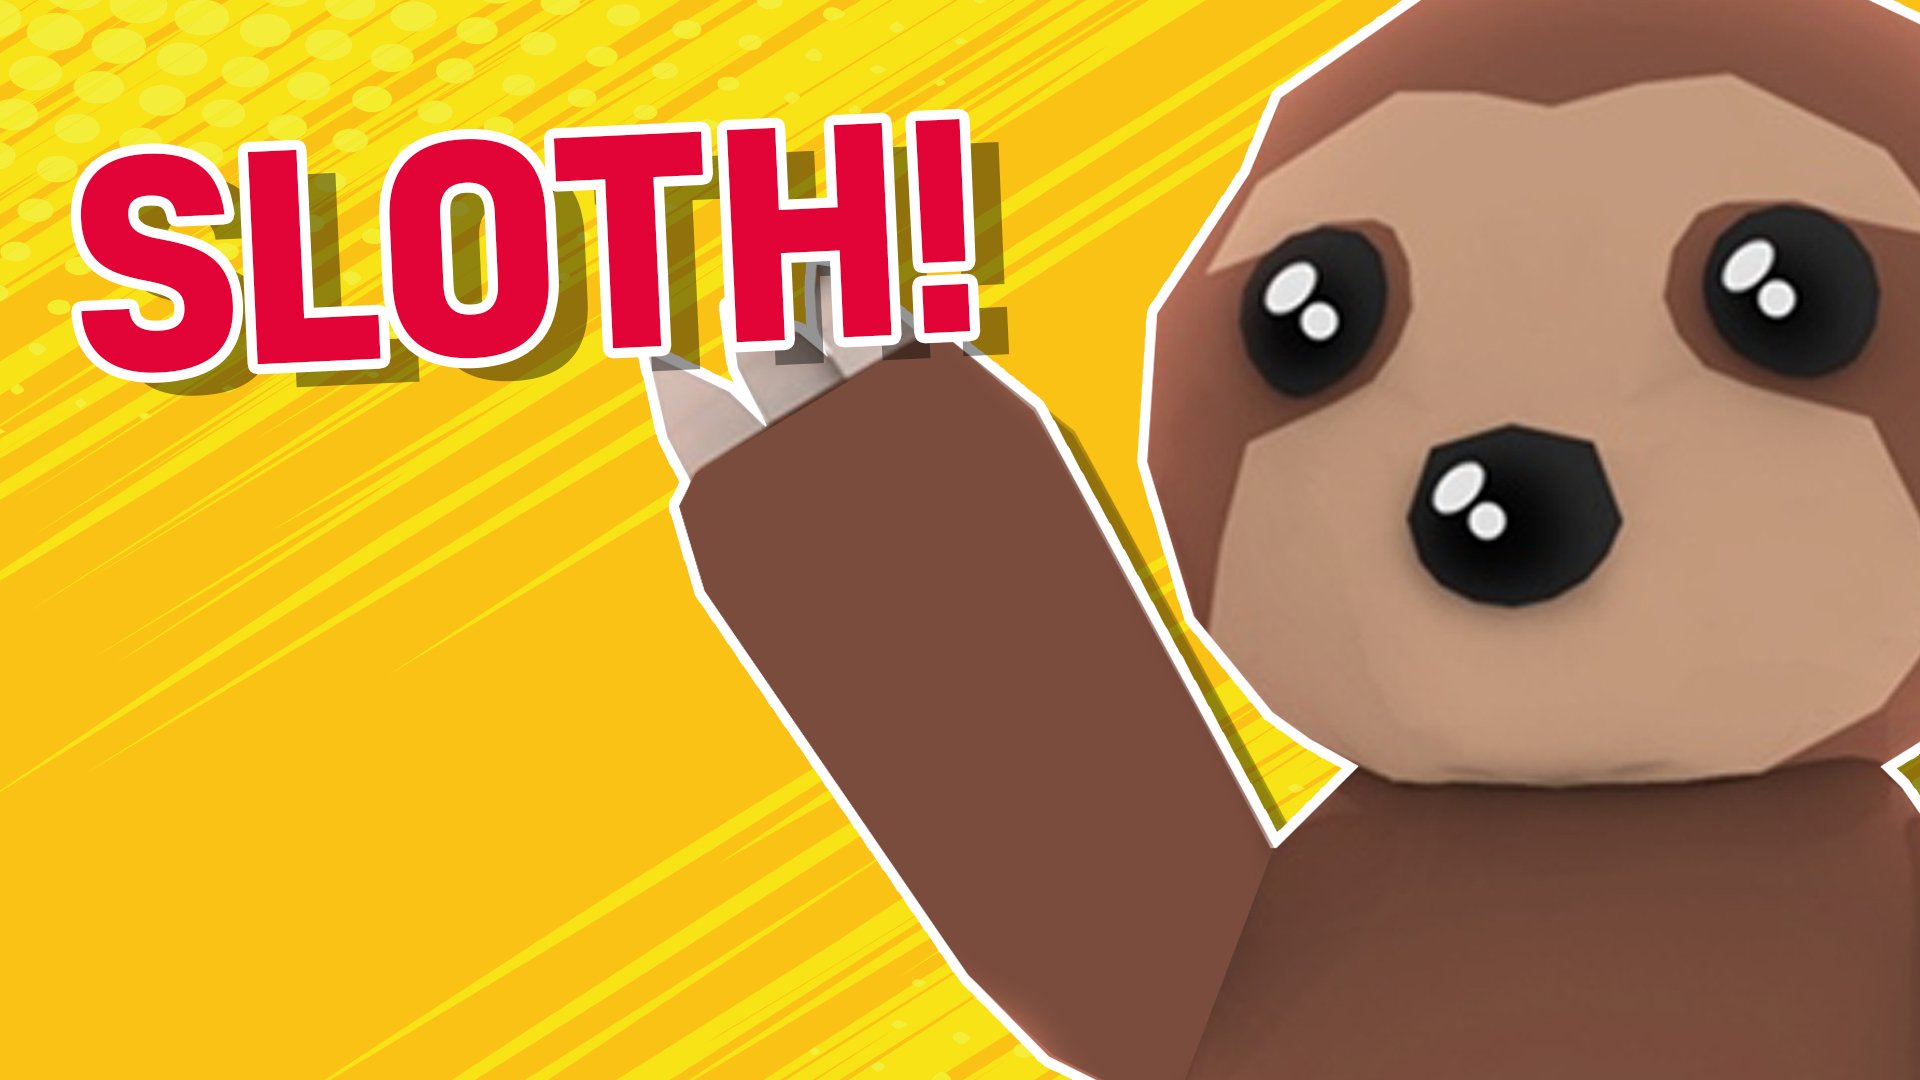 A Roblox sloth